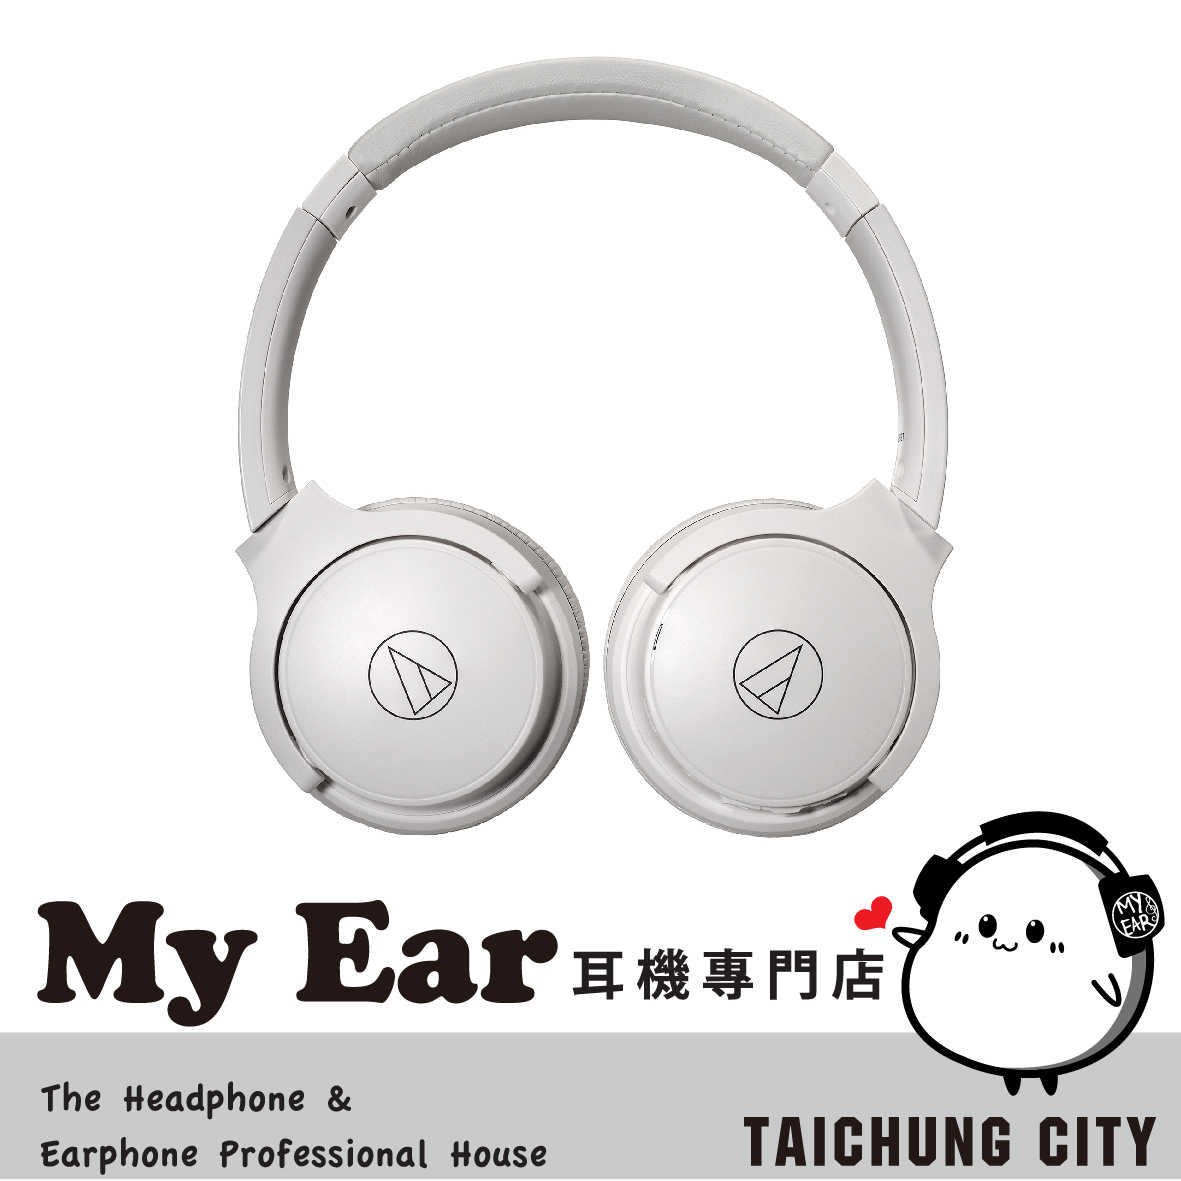 Audio-Technica 鐵三角 ATH-S220BT 白色 無線 耳罩式 耳機 | My Ear 耳機專門店